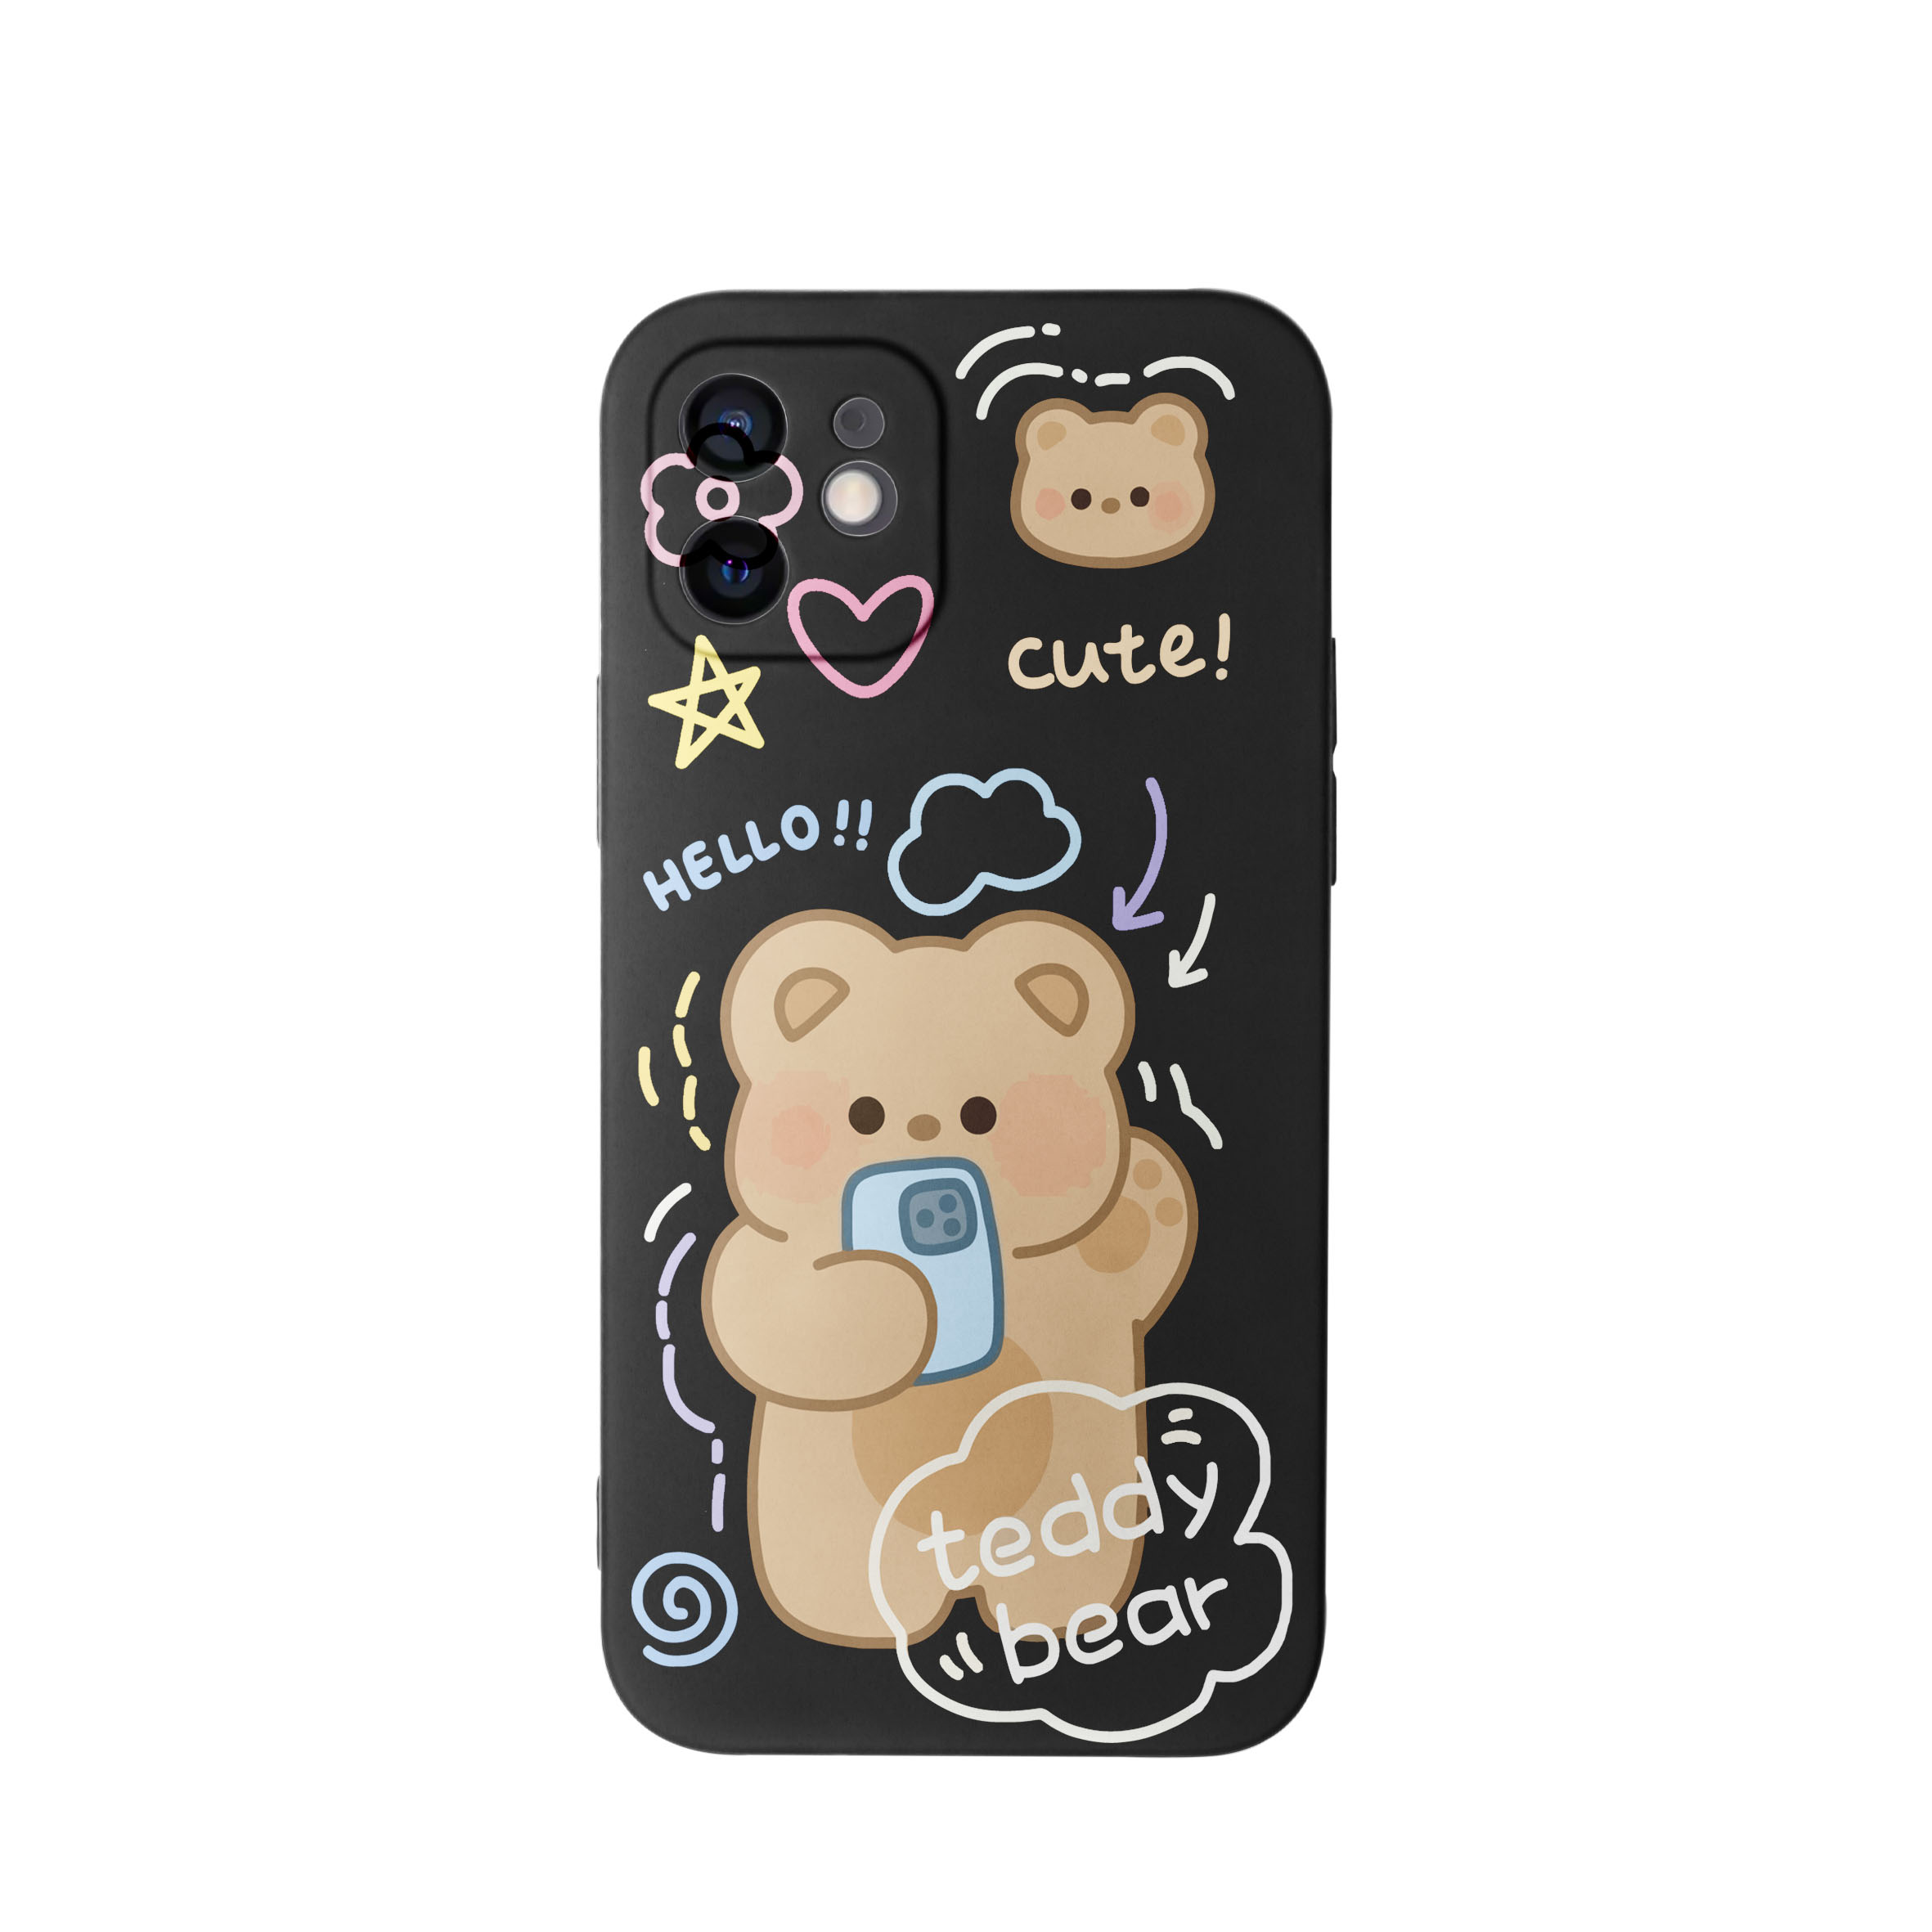 کاور طرح خرس بیر دخترونه کد f4003 مناسب برای گوشی موبایل اپل iphone 11